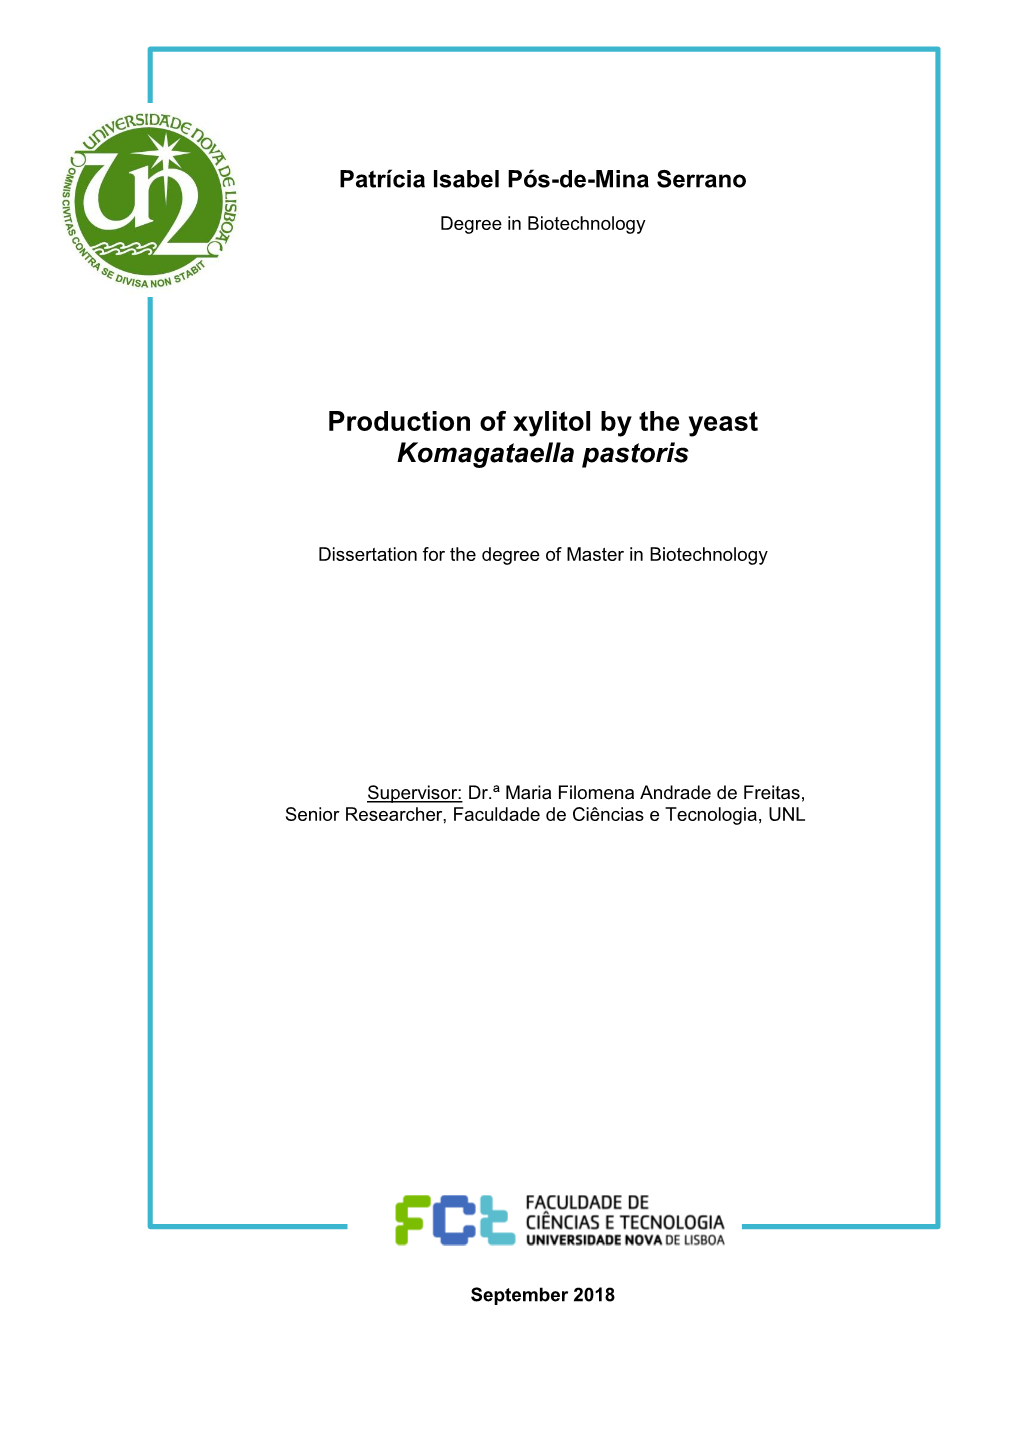 Production of Xylitol by the Yeast Komagataella Pastoris